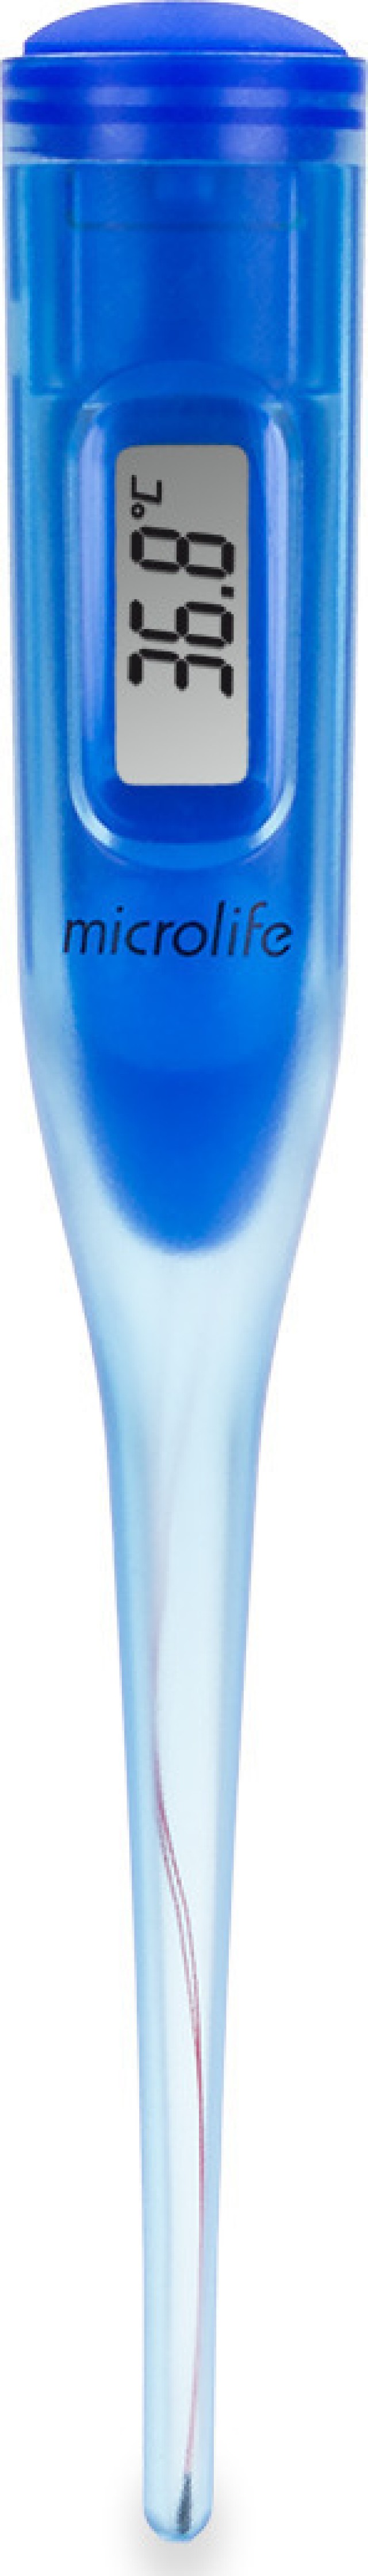 Microlife MT 60 Ψηφιακό Θερμόμετρο Μπλε 60 Δευτερολέπτων 1 Τεμάχιο